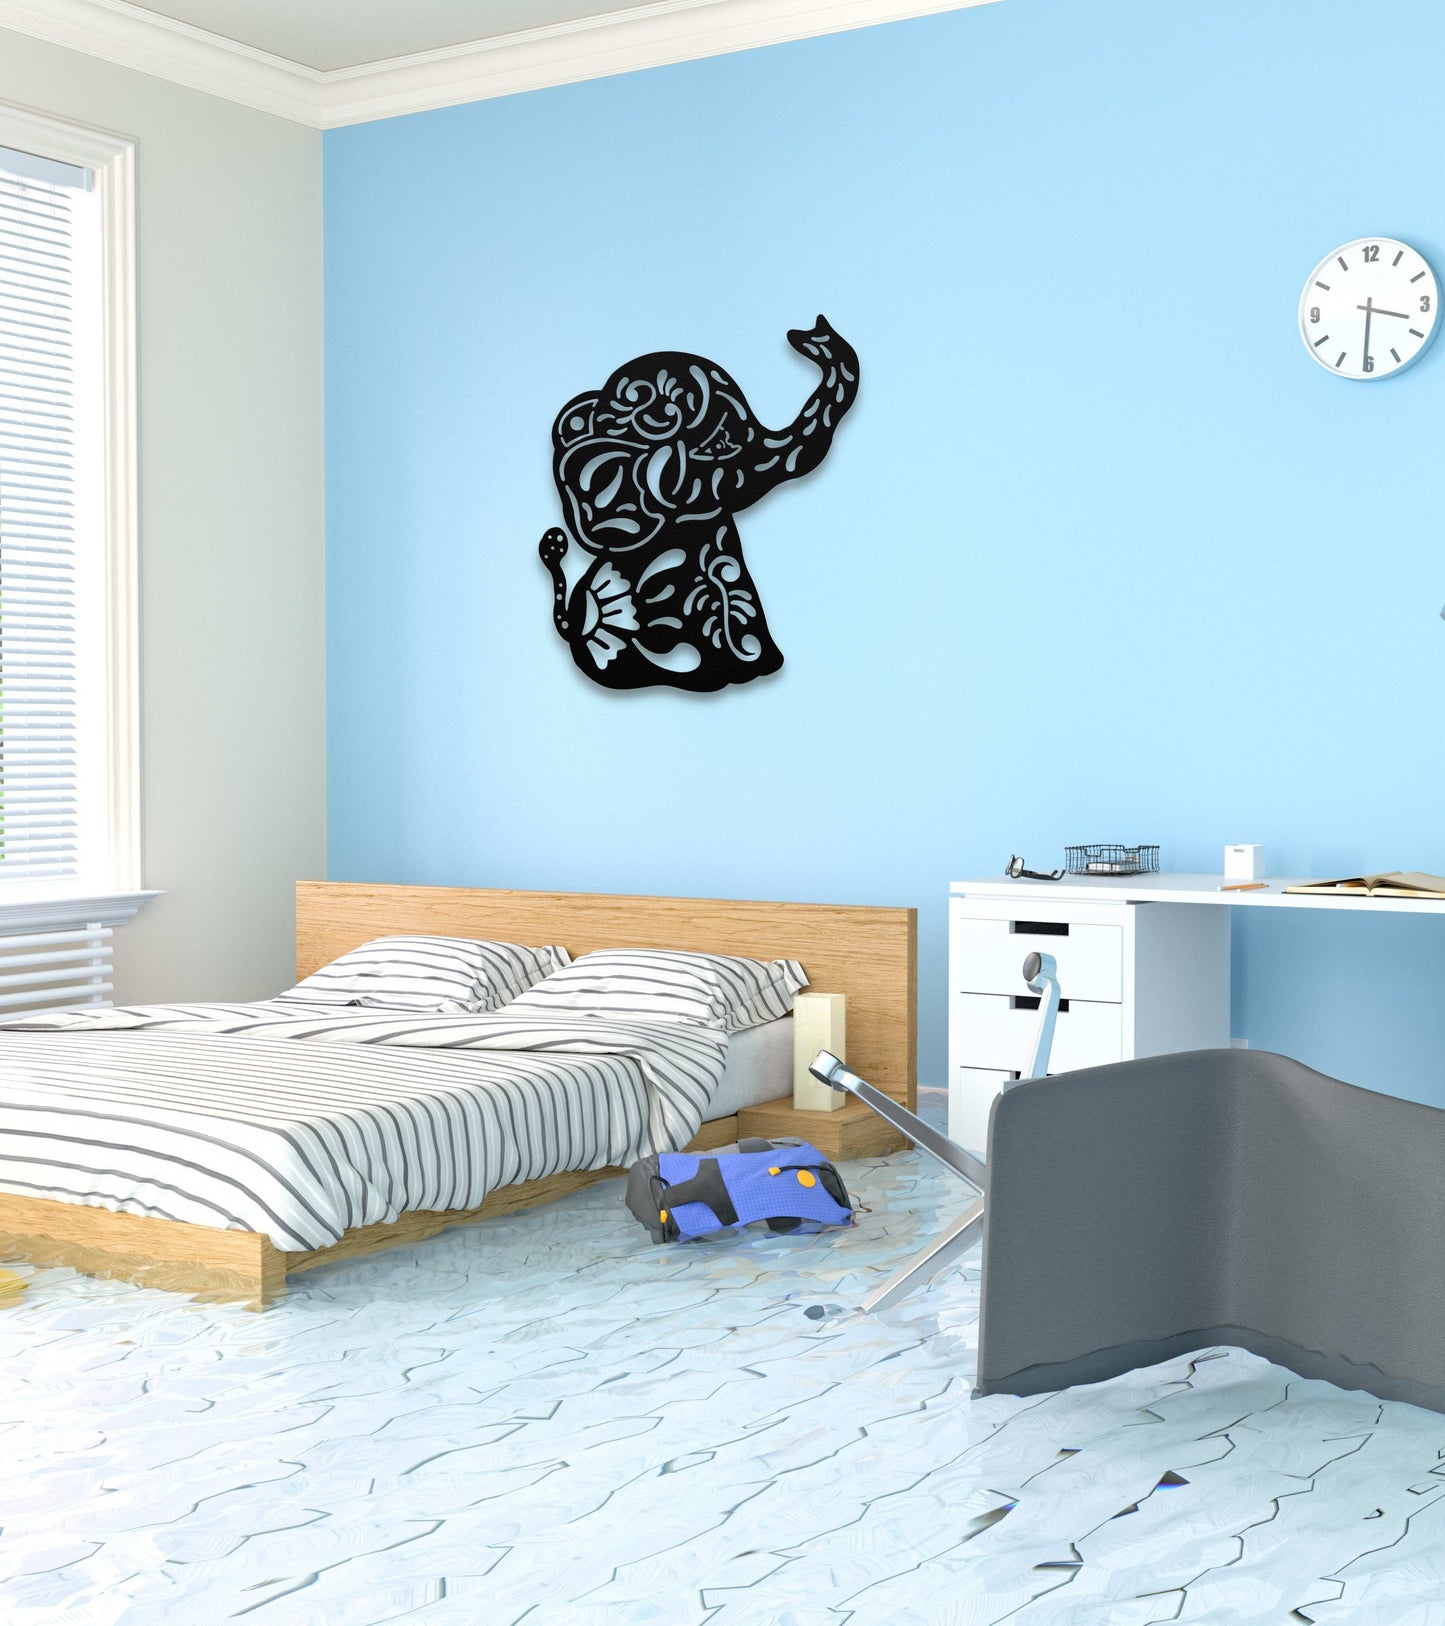 Zentangle elephant Nursery Decorative Metal Wall Art